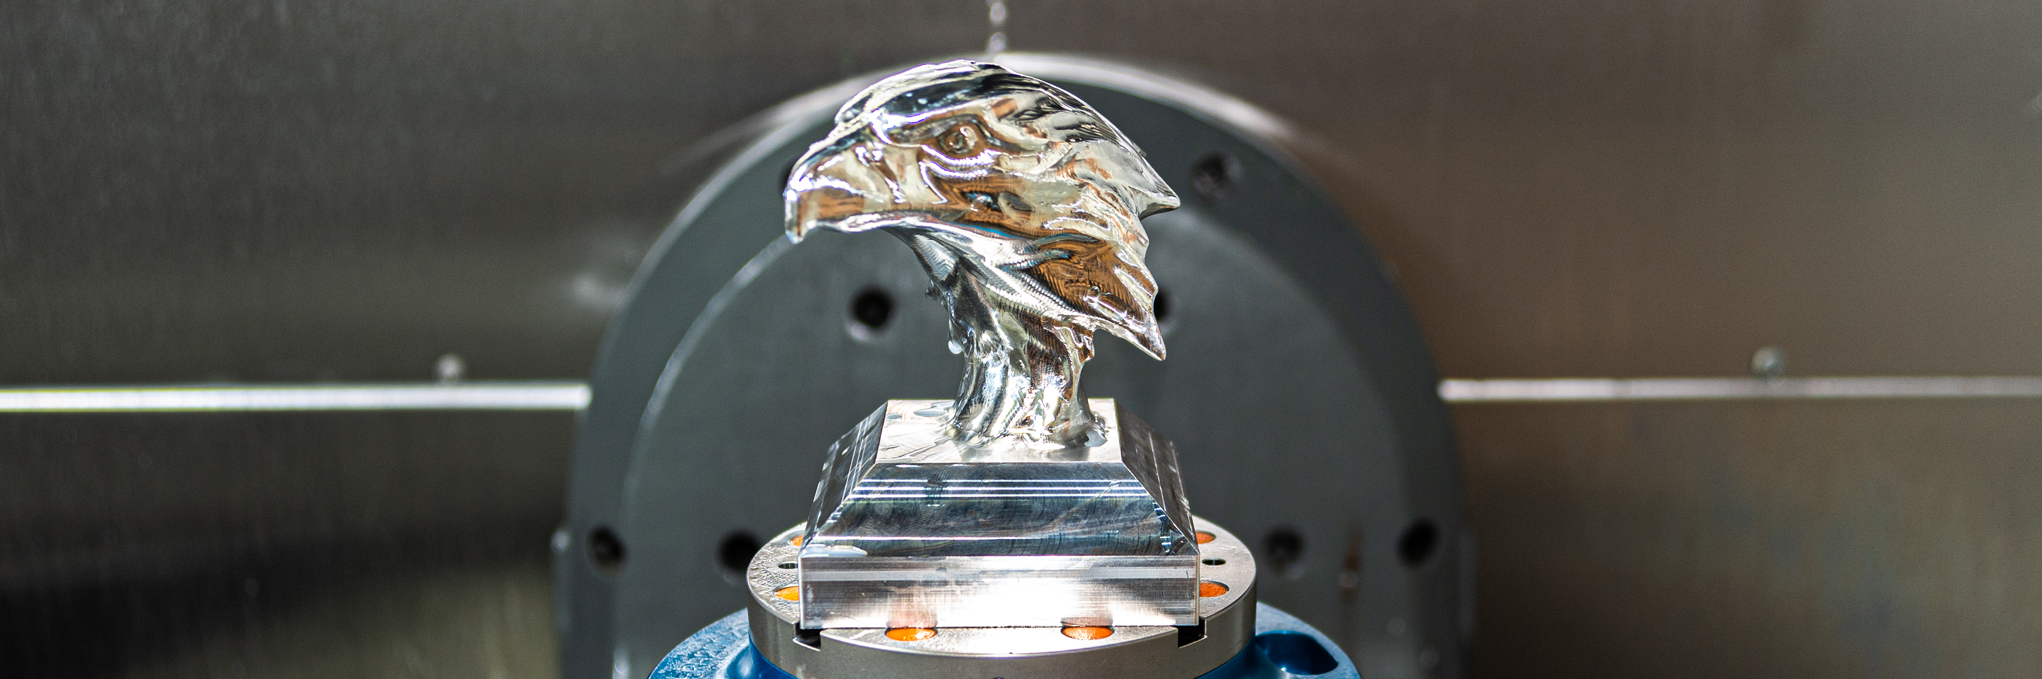 ICAMS creates Auburn-themed eagle sculptures through advanced machinery 